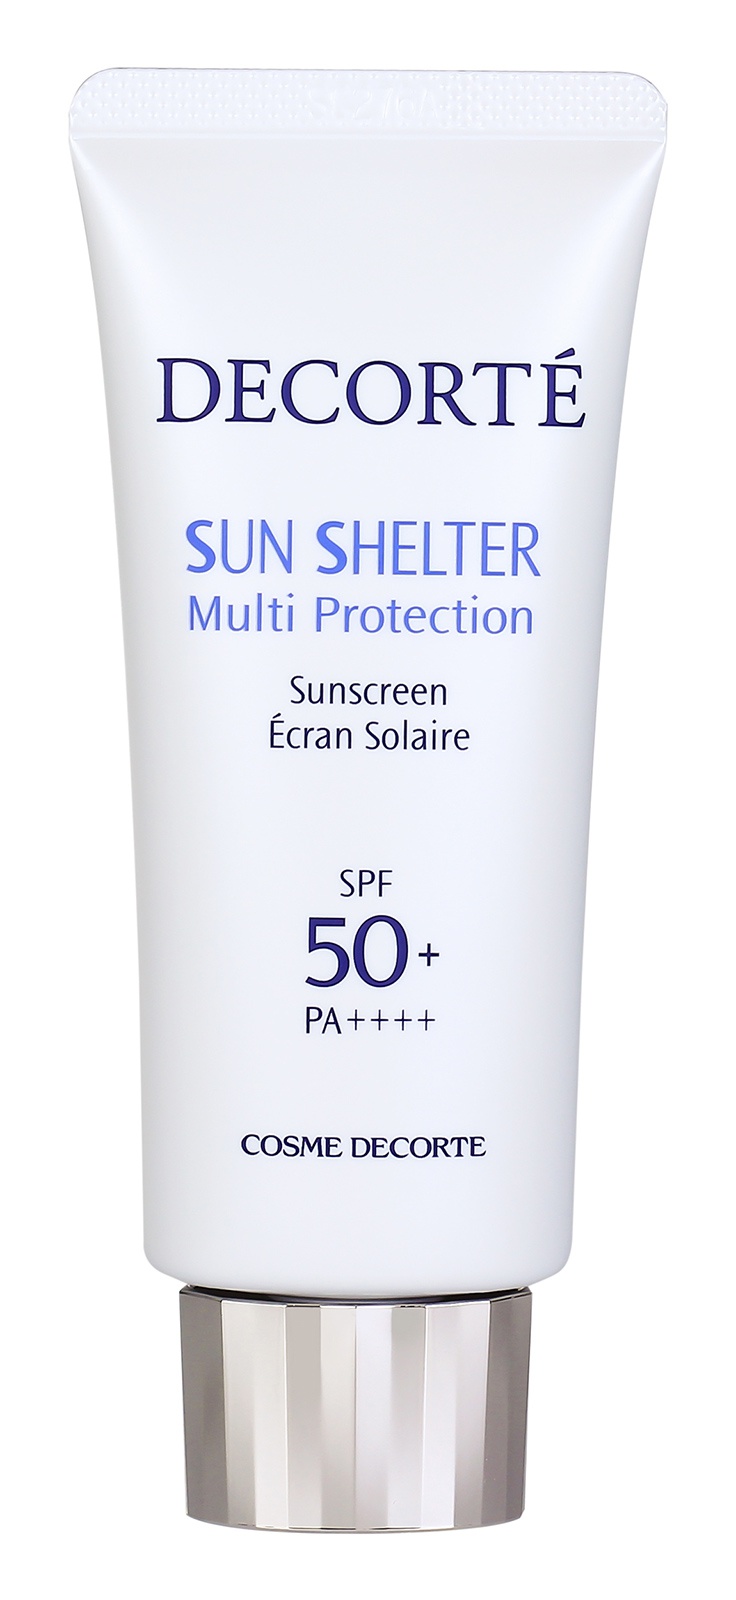 Decorte Sun Shelter Multi Protection Sunscreen Spf 50+